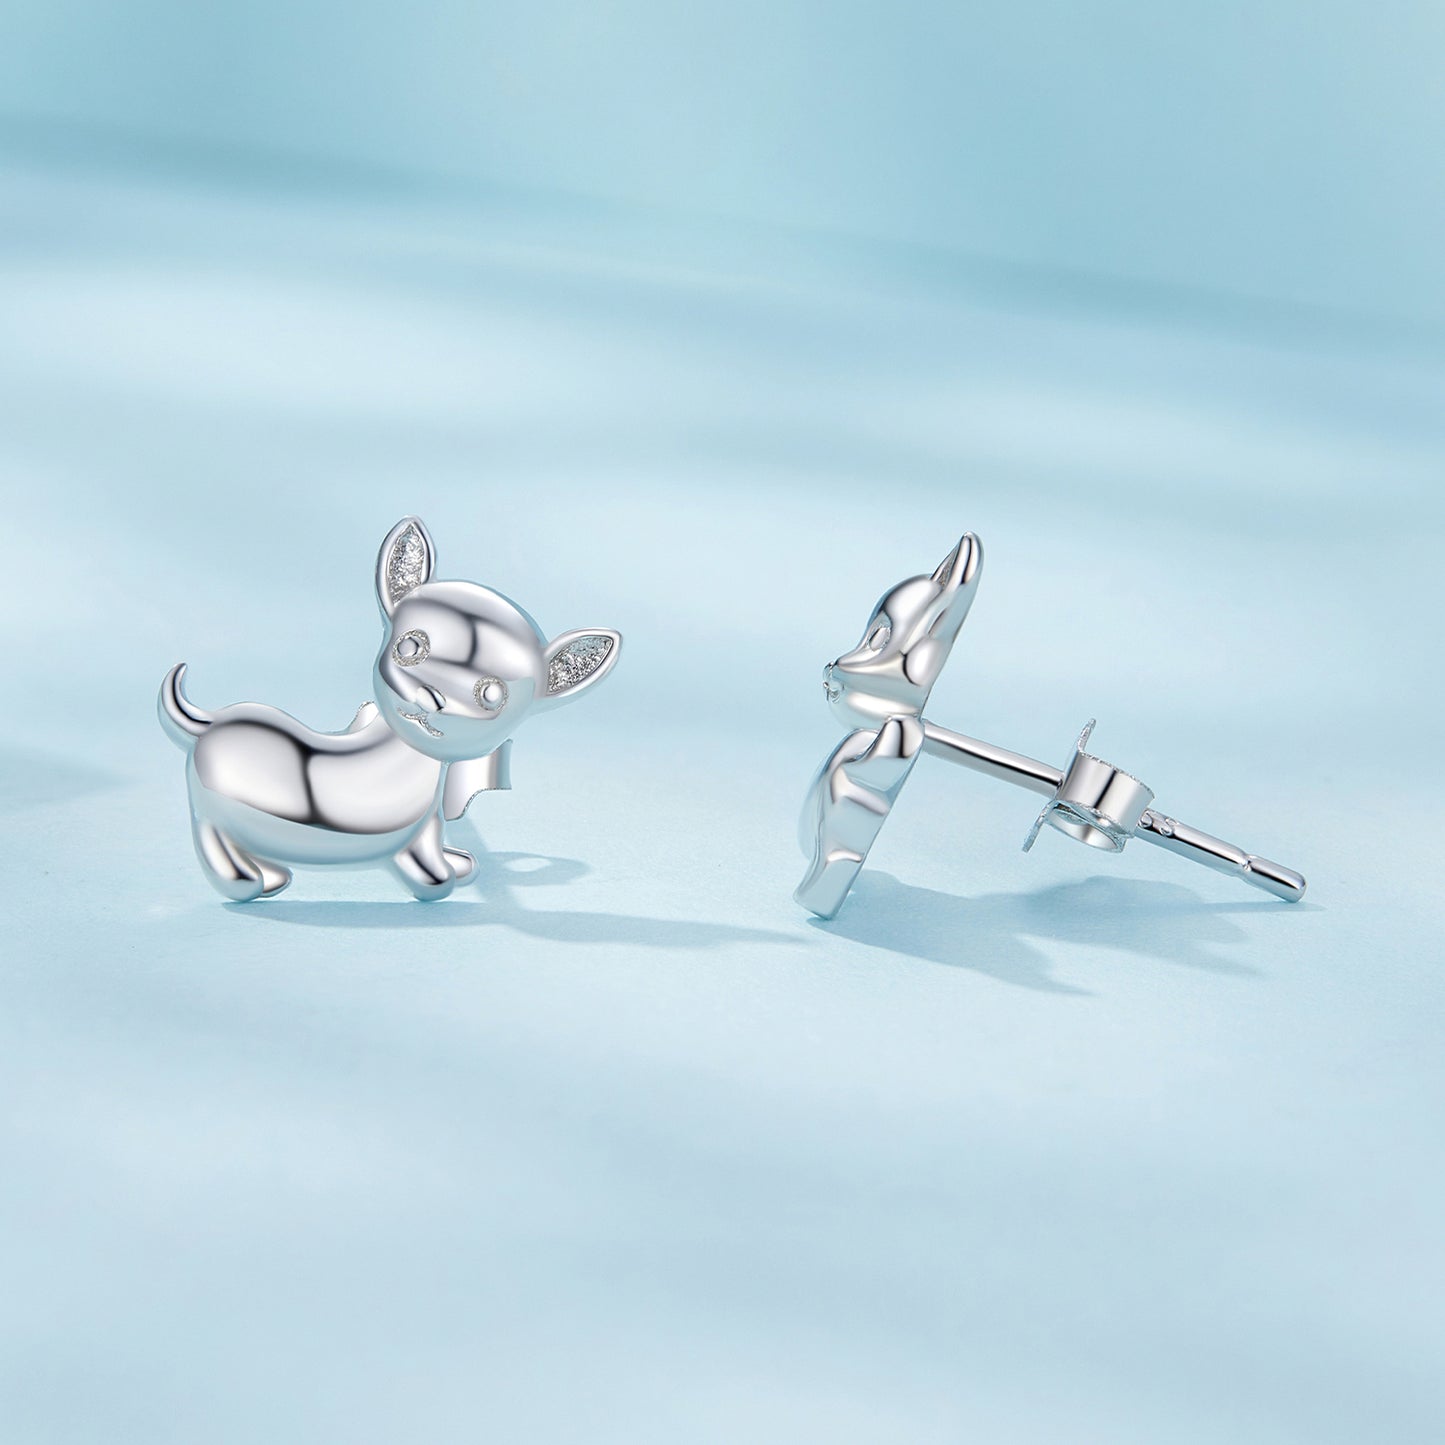 Chihuahua earrings,  92.5% Sterling Silver,  Cute dog ear stud